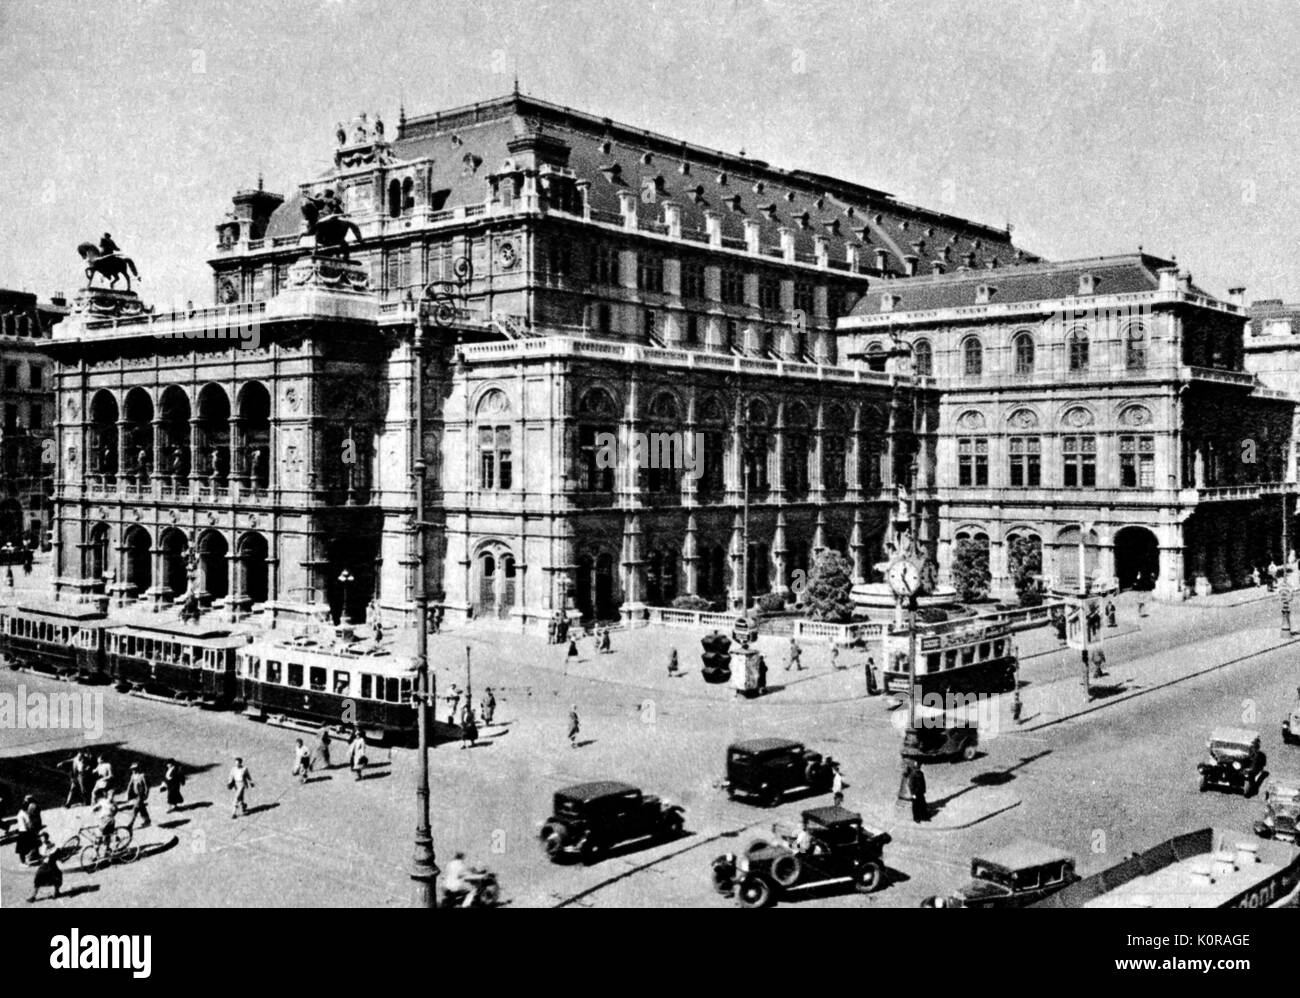 Vienne. Staatsoper (l'opéra), c.1920s. Inauguré en 1869. Administration : F. Schalk (1919-1924), C. Krauss (1929-1934), R. Strauss (directeur, 1919 - ). Banque D'Images